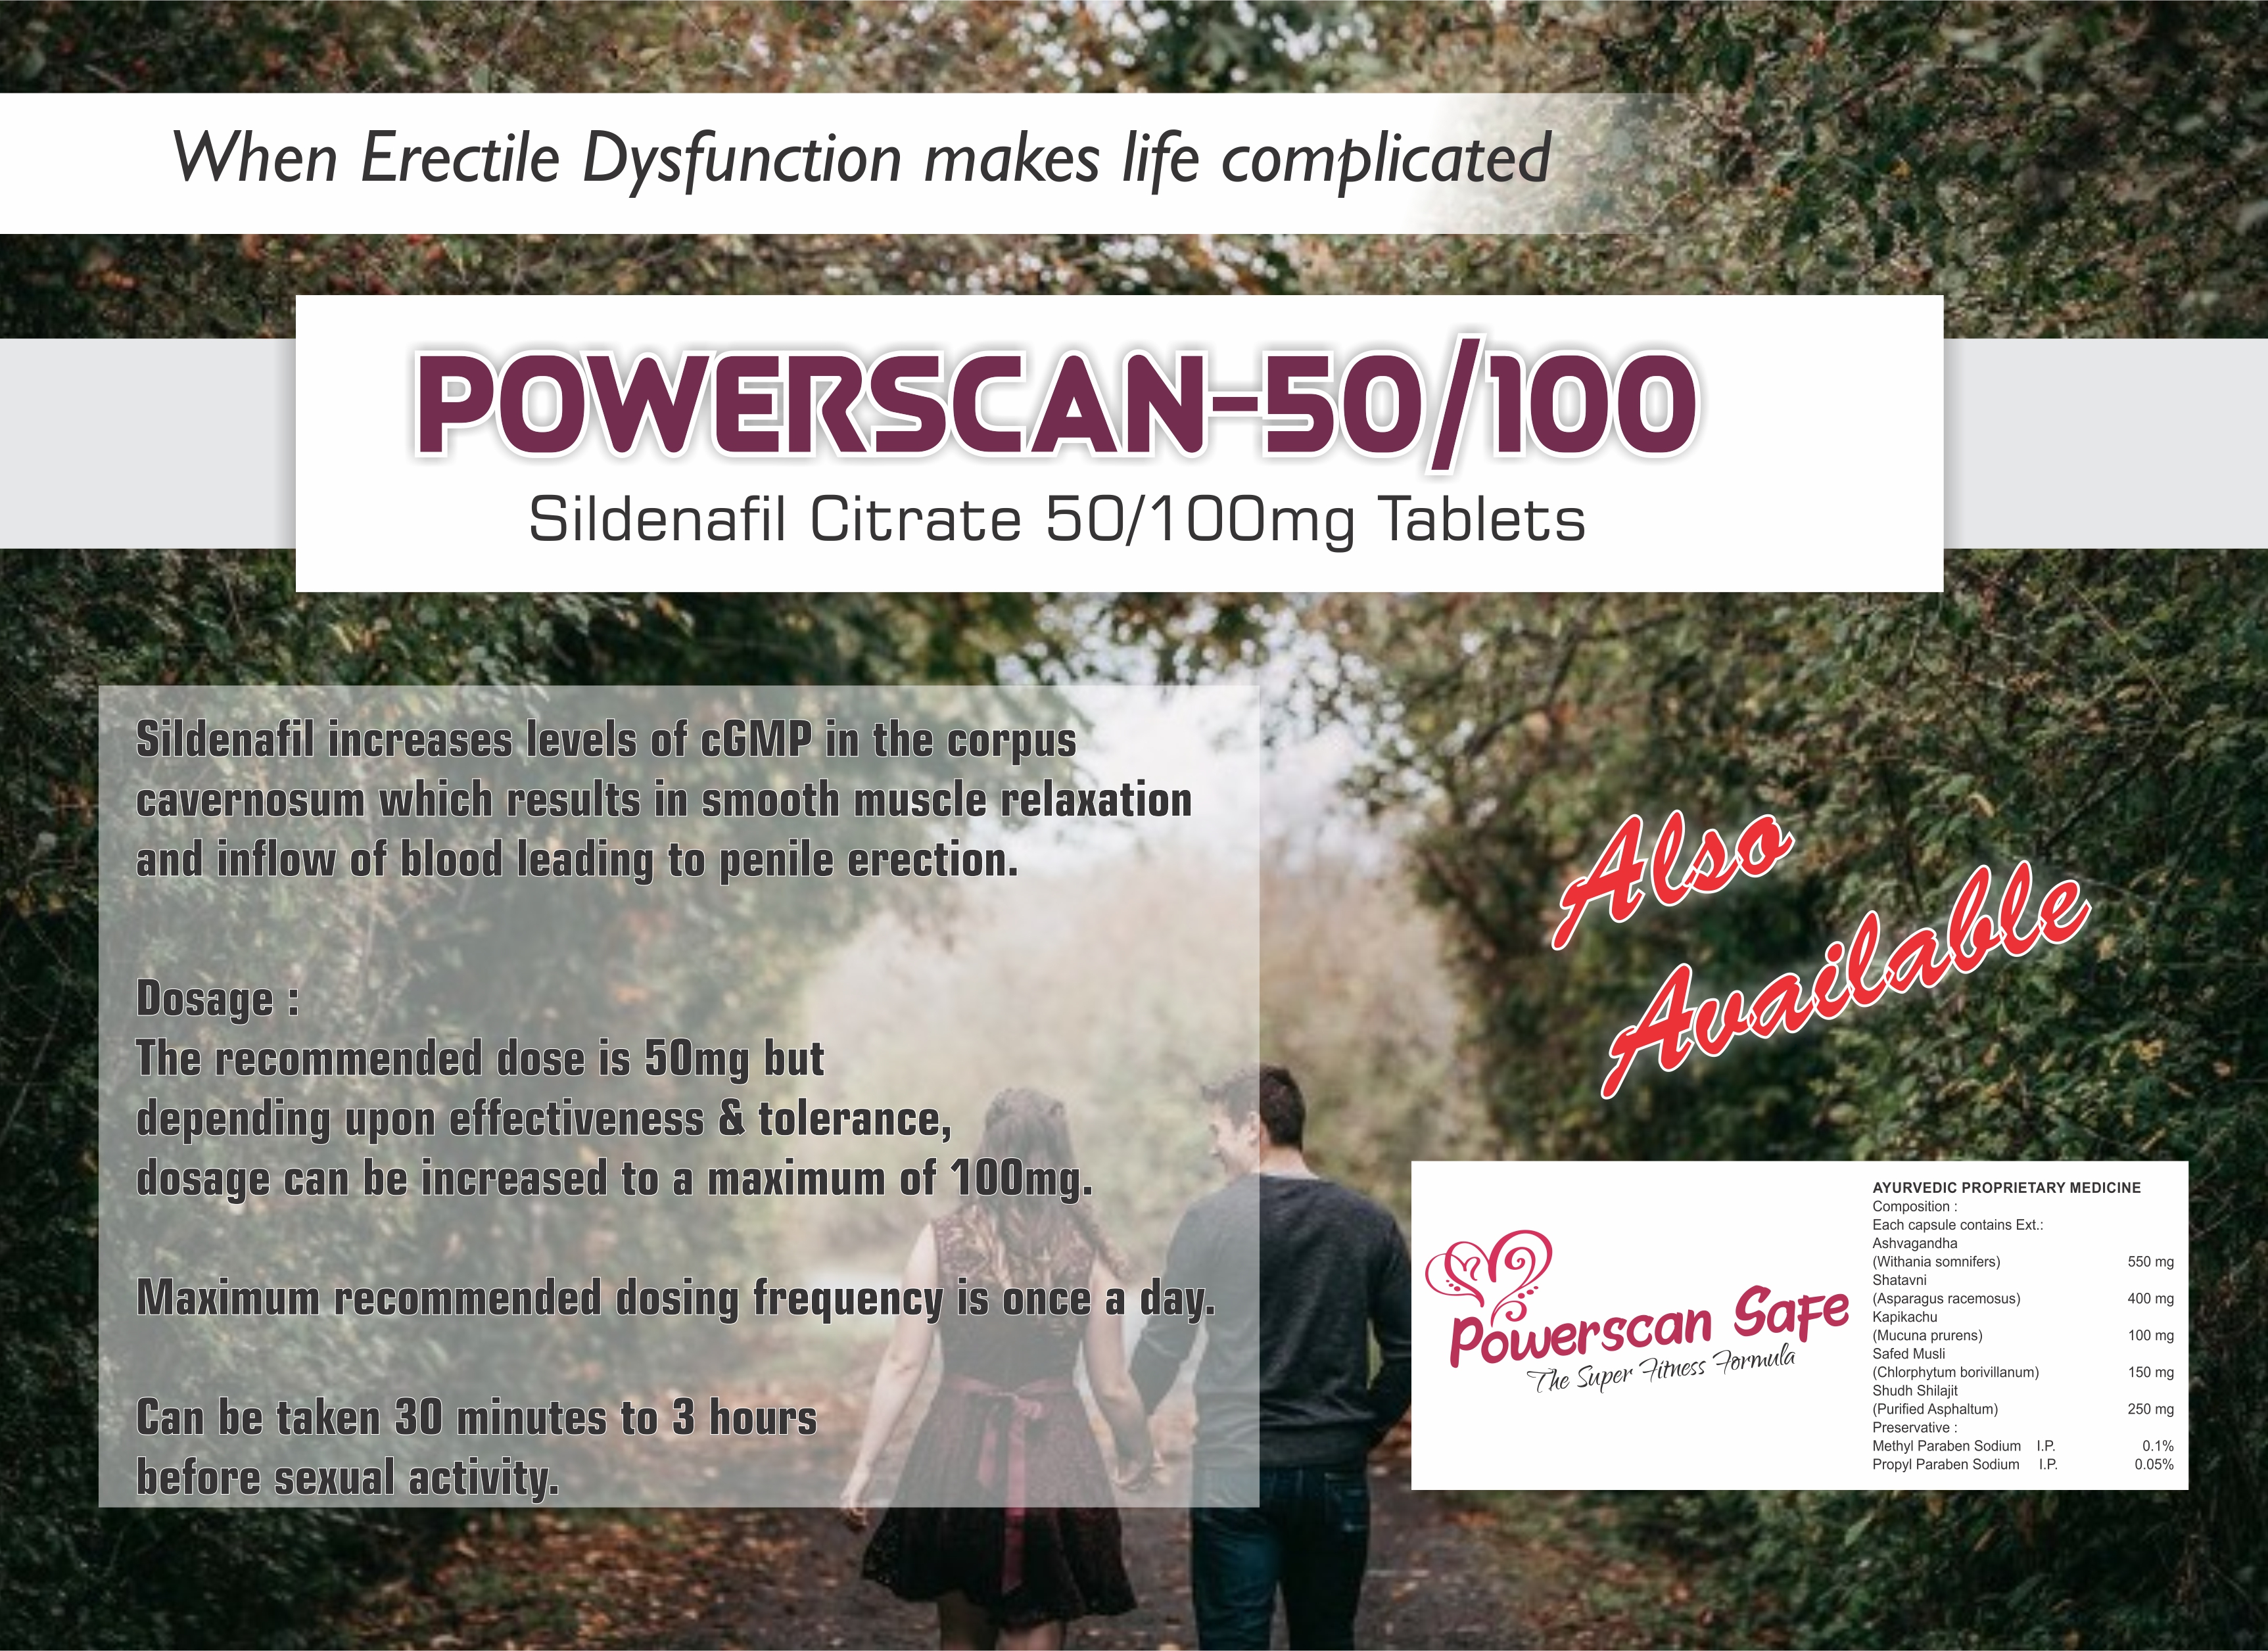 POWERSCAN- 50/100